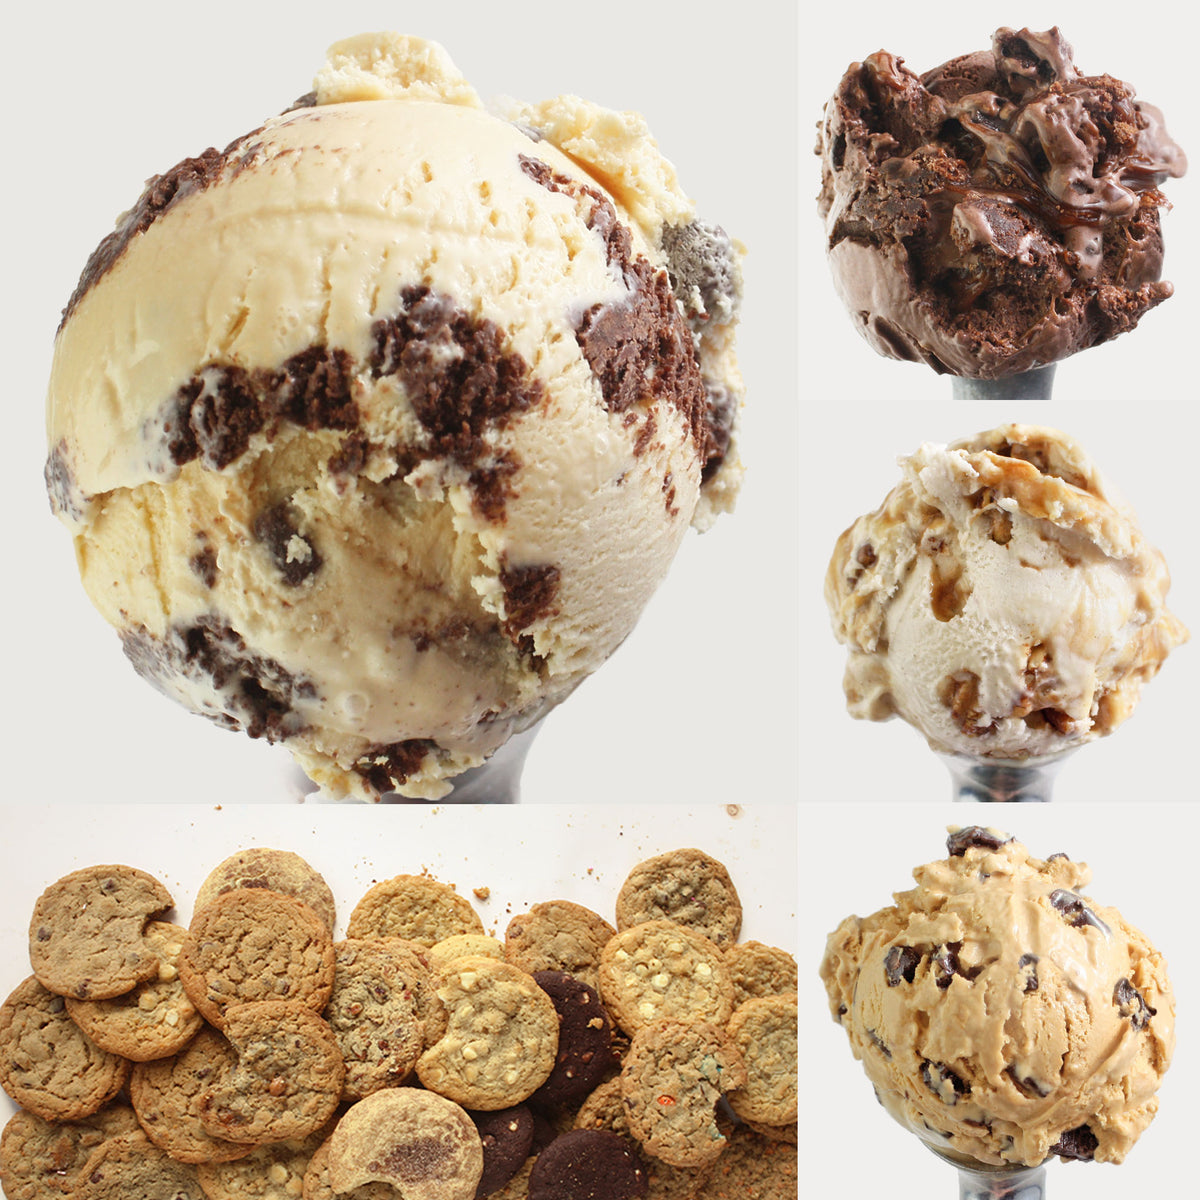 Atlas MedStaff Corporate Ice Cream and Cookie Collection – eCreamery